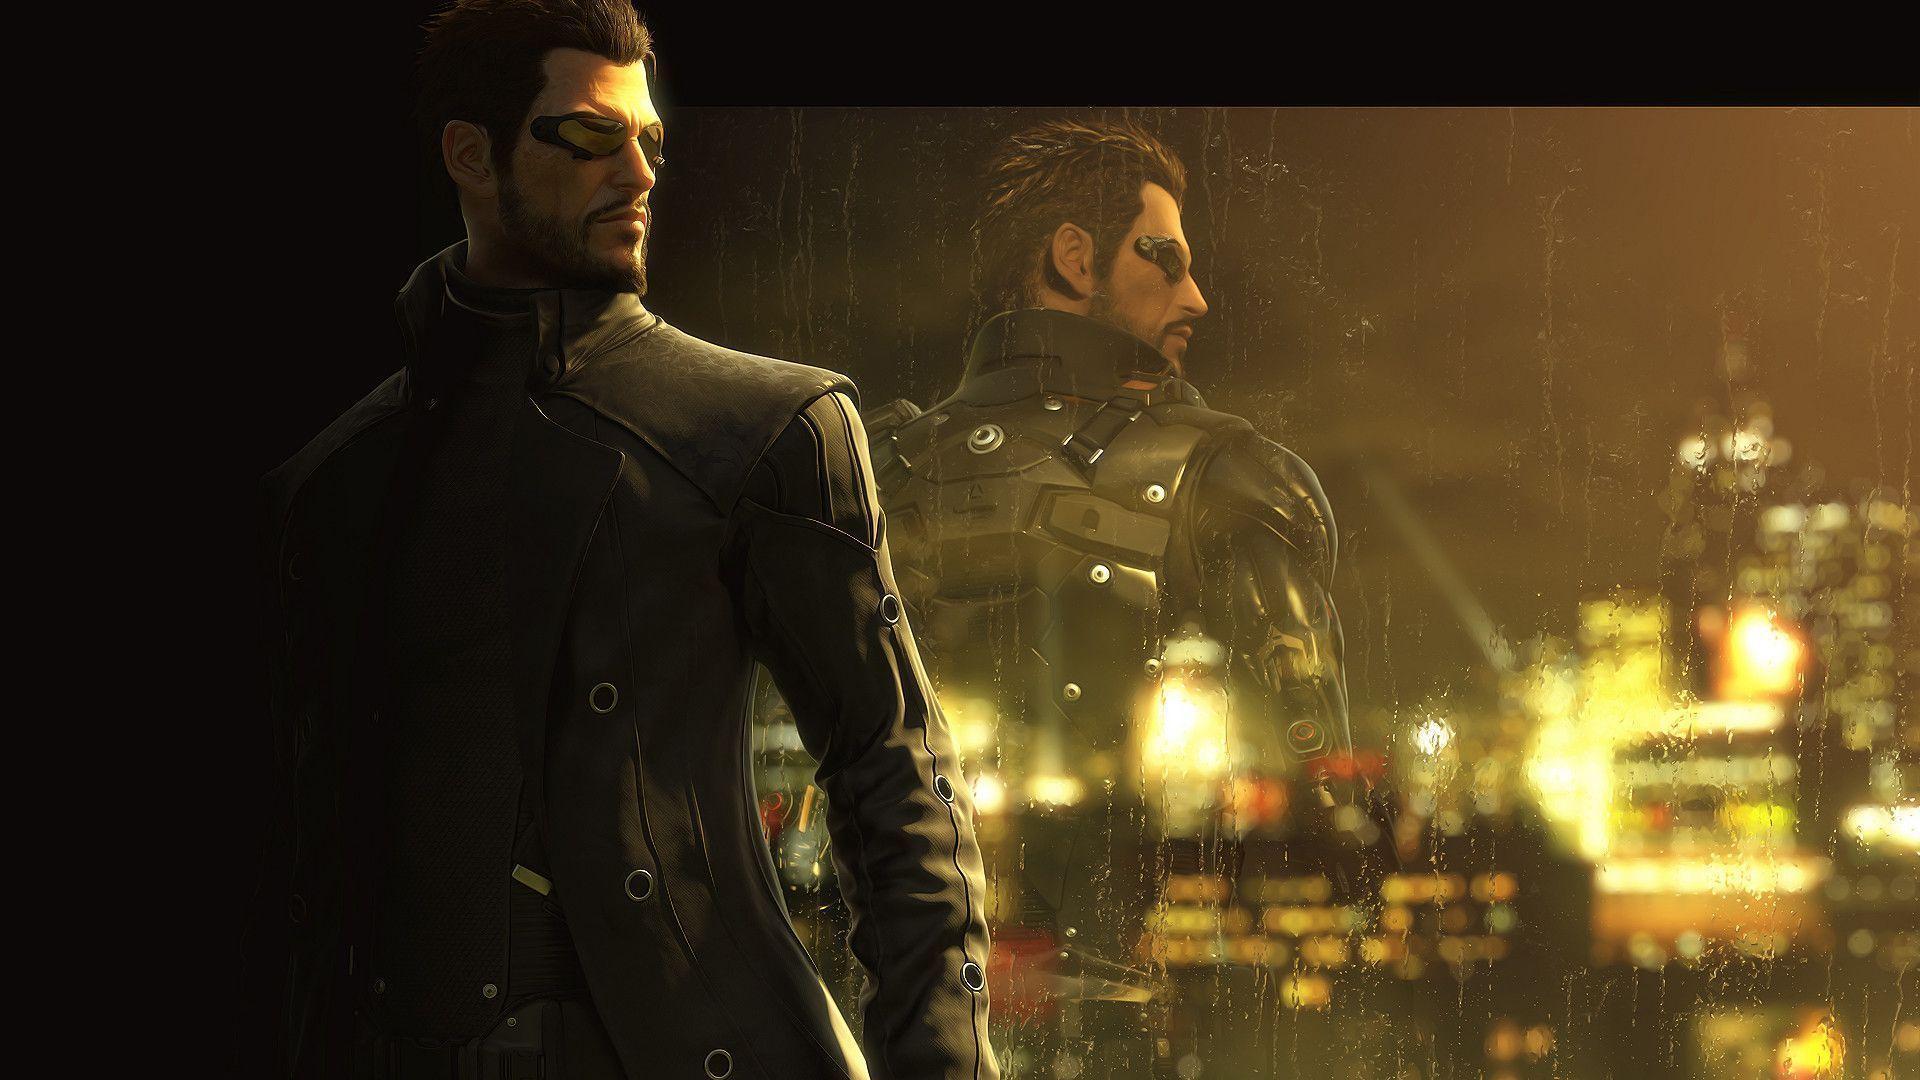 image For > Deus Ex Human Revolution iPhone Wallpaper